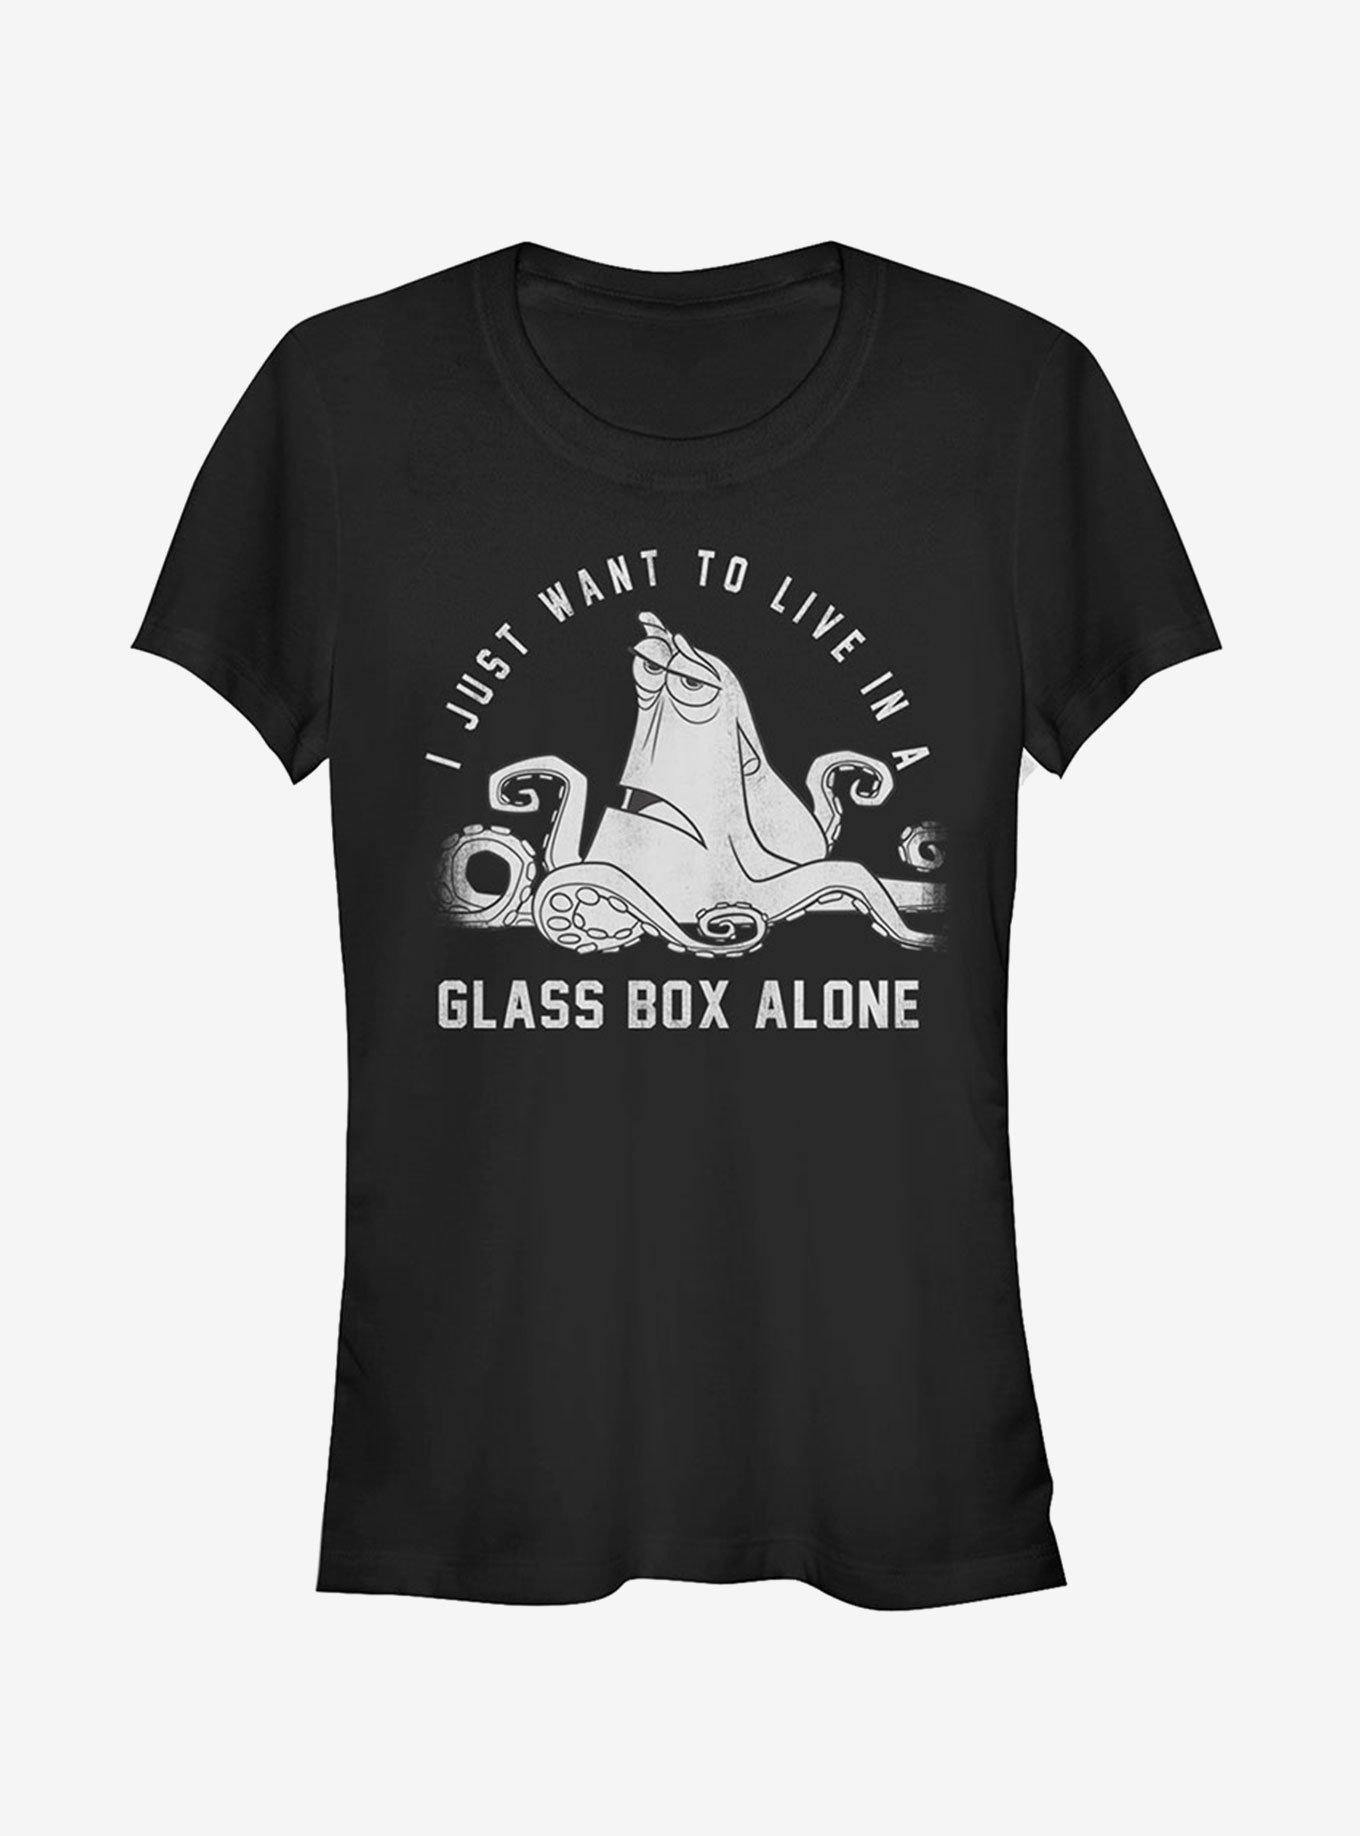 Disney Pixar Finding Dory Hank Glass Box Alone Girls T-Shirt, BLACK, hi-res